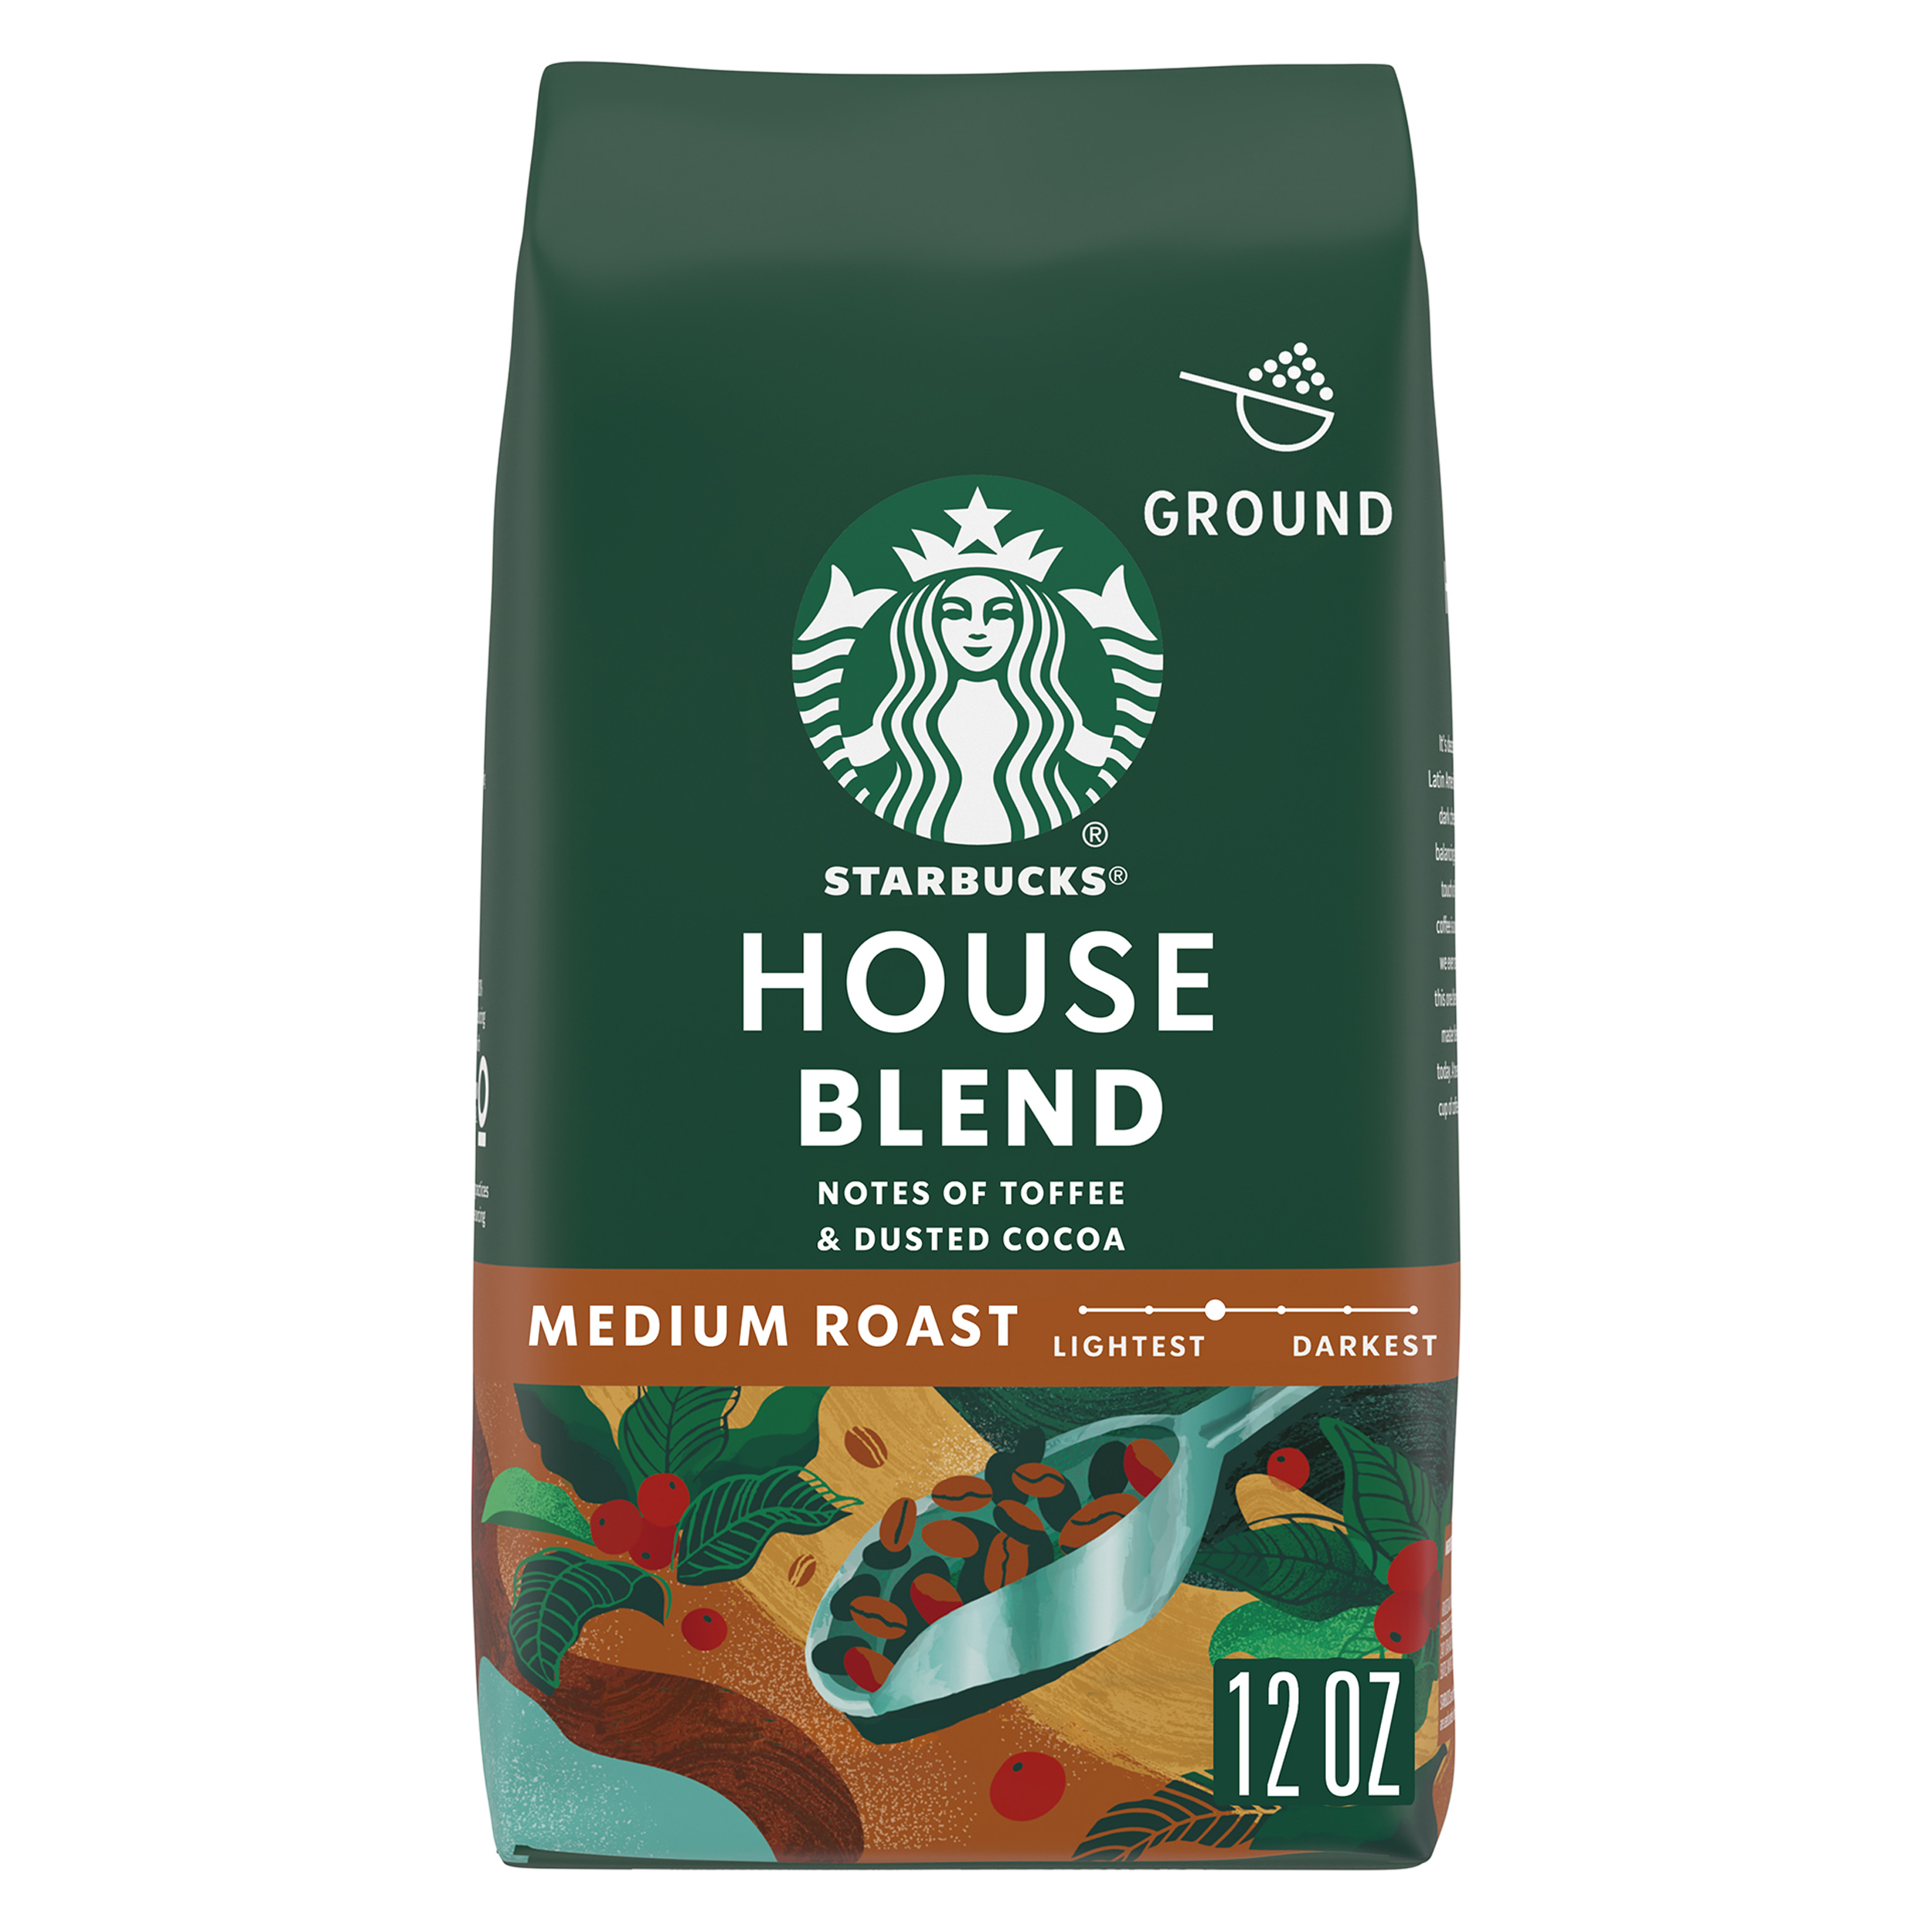 Starbucks House Blend, Ground Coffee, Medium Roast, 12 oz - image 1 of 8